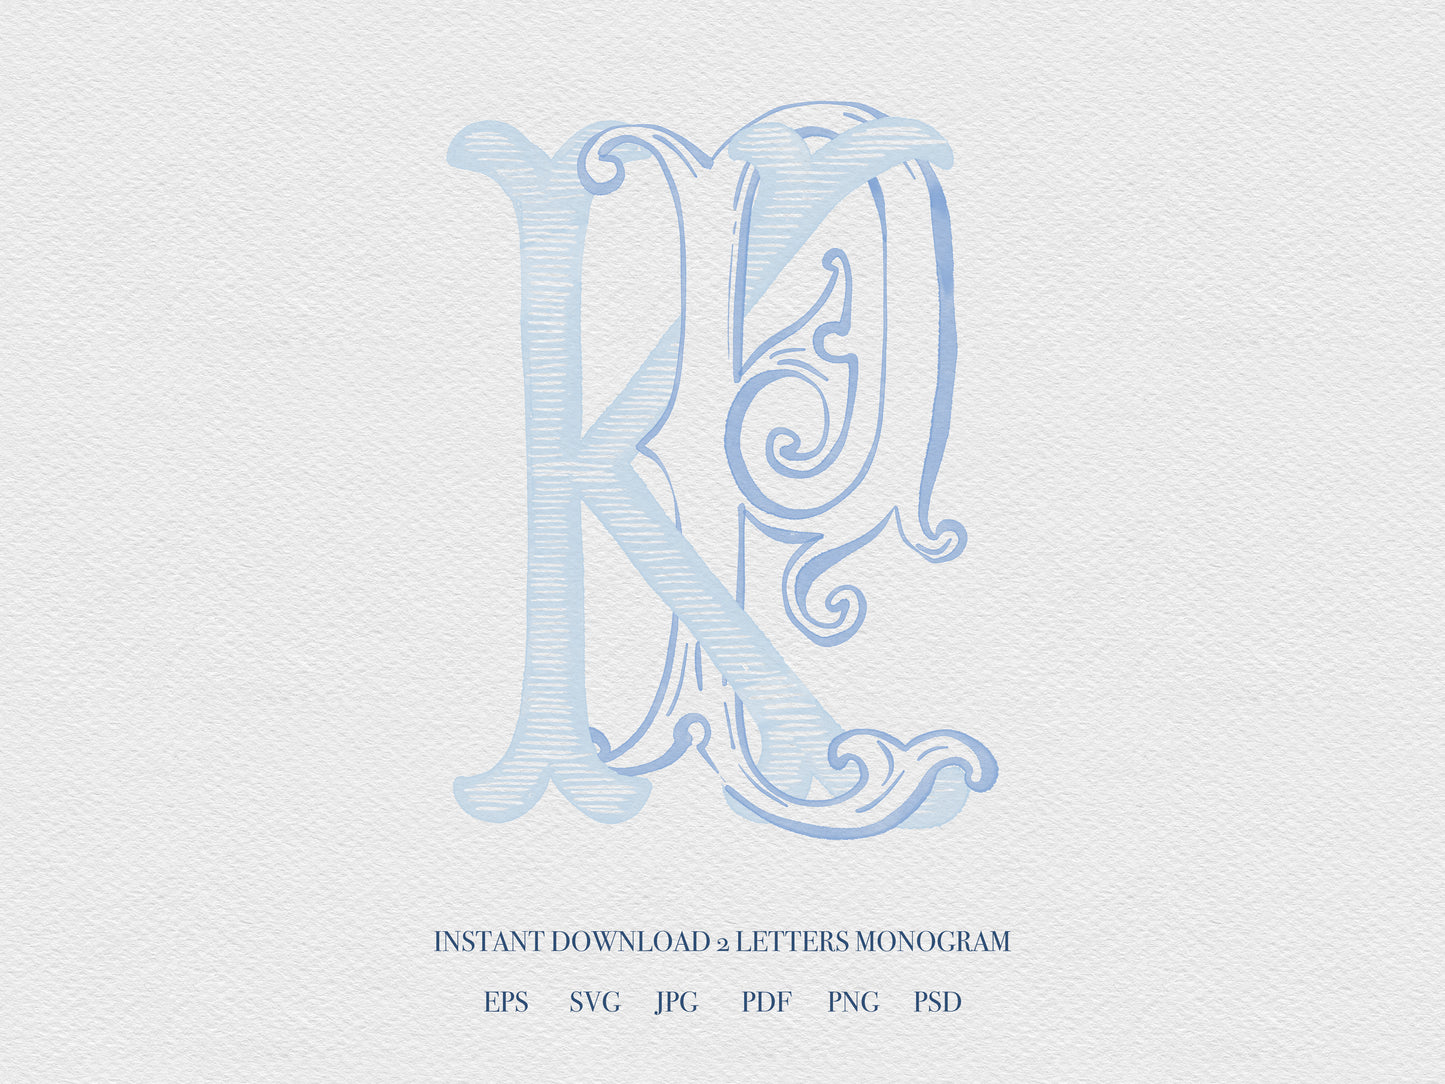 2 Letter Monogram with Letters KP PK | Digital Download - Wedding Monogram SVG, Personal Logo, Wedding Logo for Wedding Invitations The Wedding Crest Lab